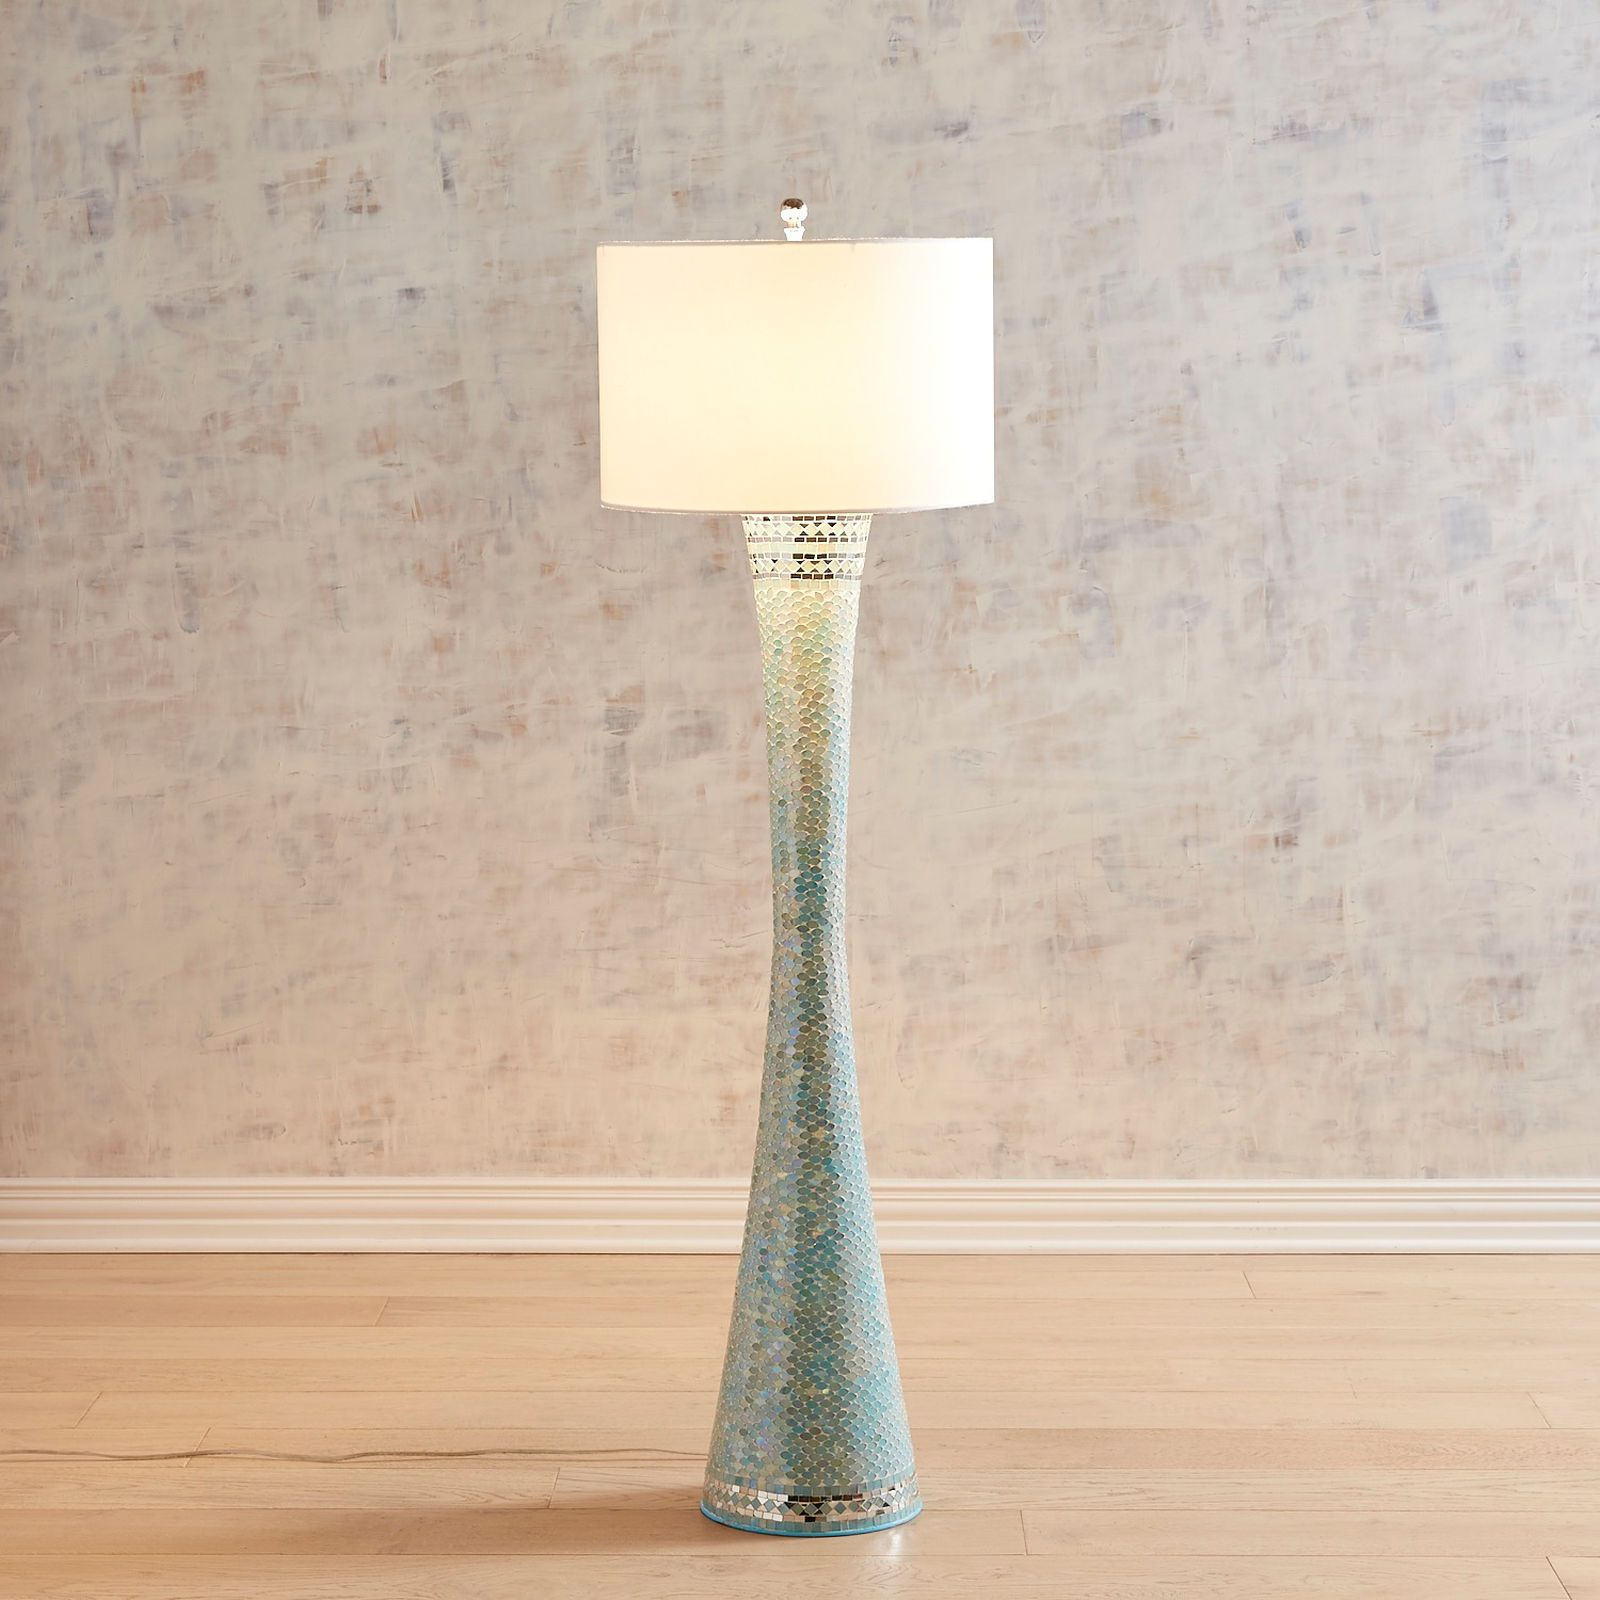 Aqua Mosaic Floor Lamp Products I Like Floor Lamp Blue regarding measurements 1600 X 1600